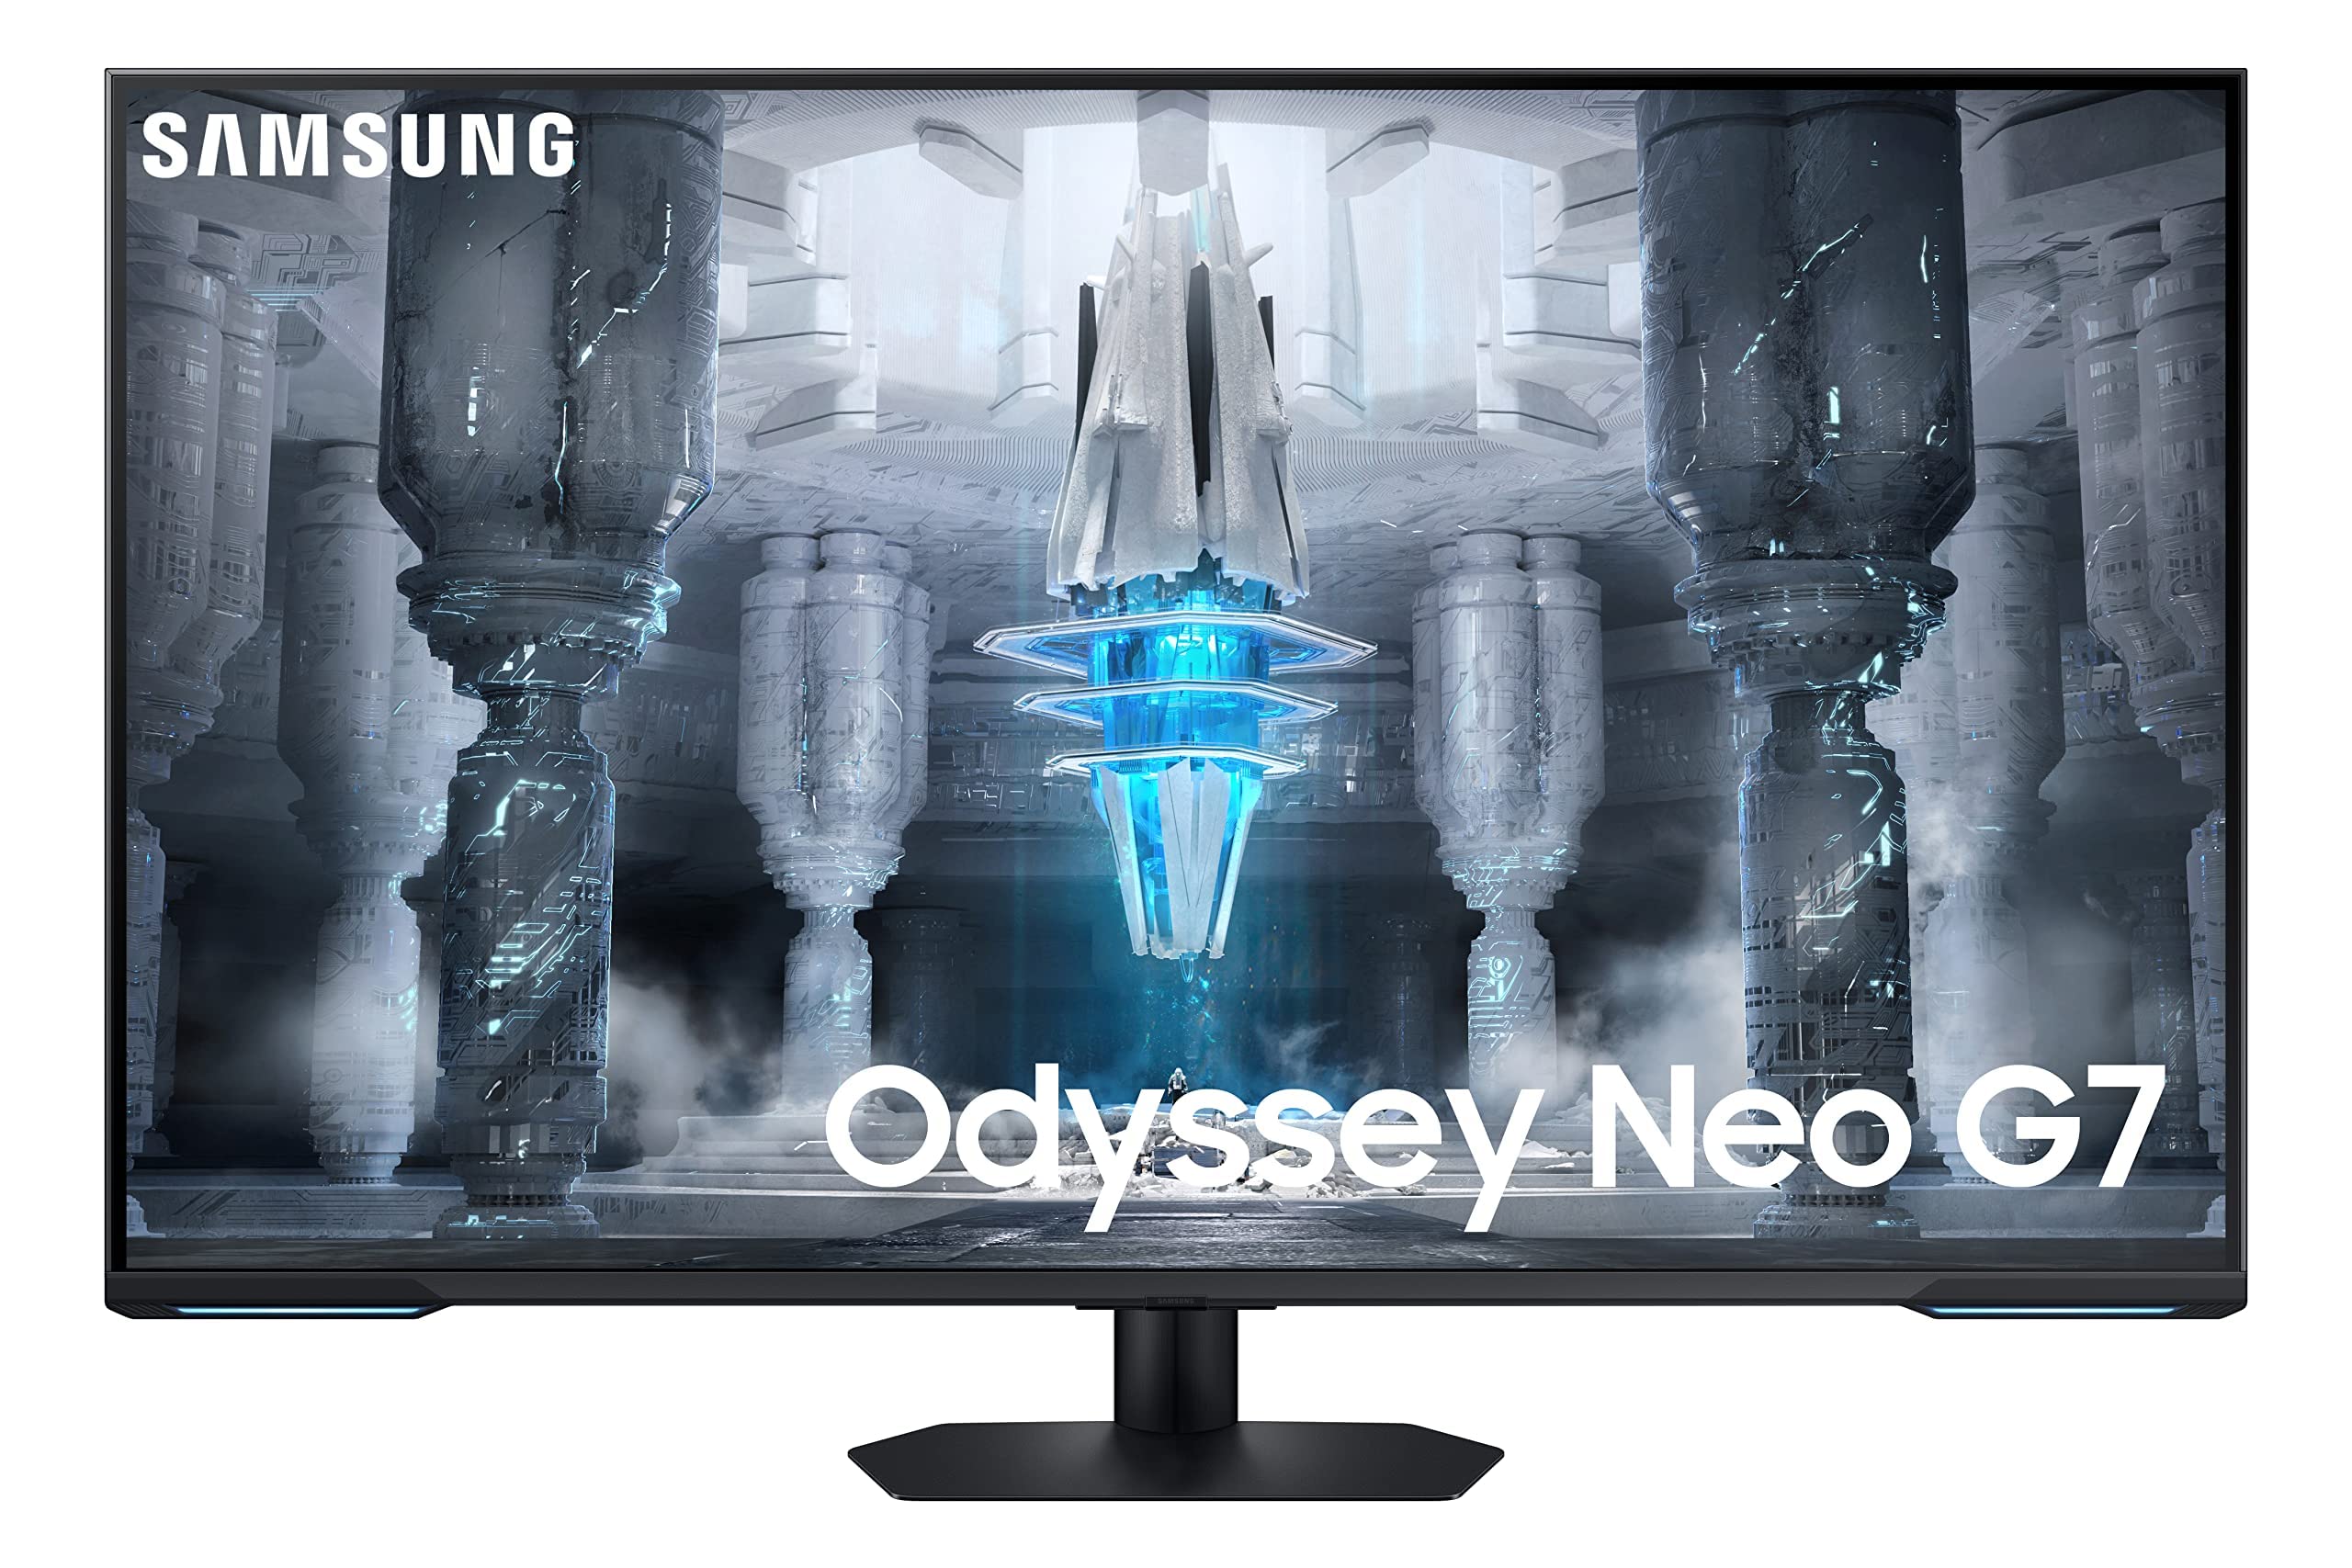 SAMSUNG 43-Inch Odyssey Neo G7 $499.99  Amazon